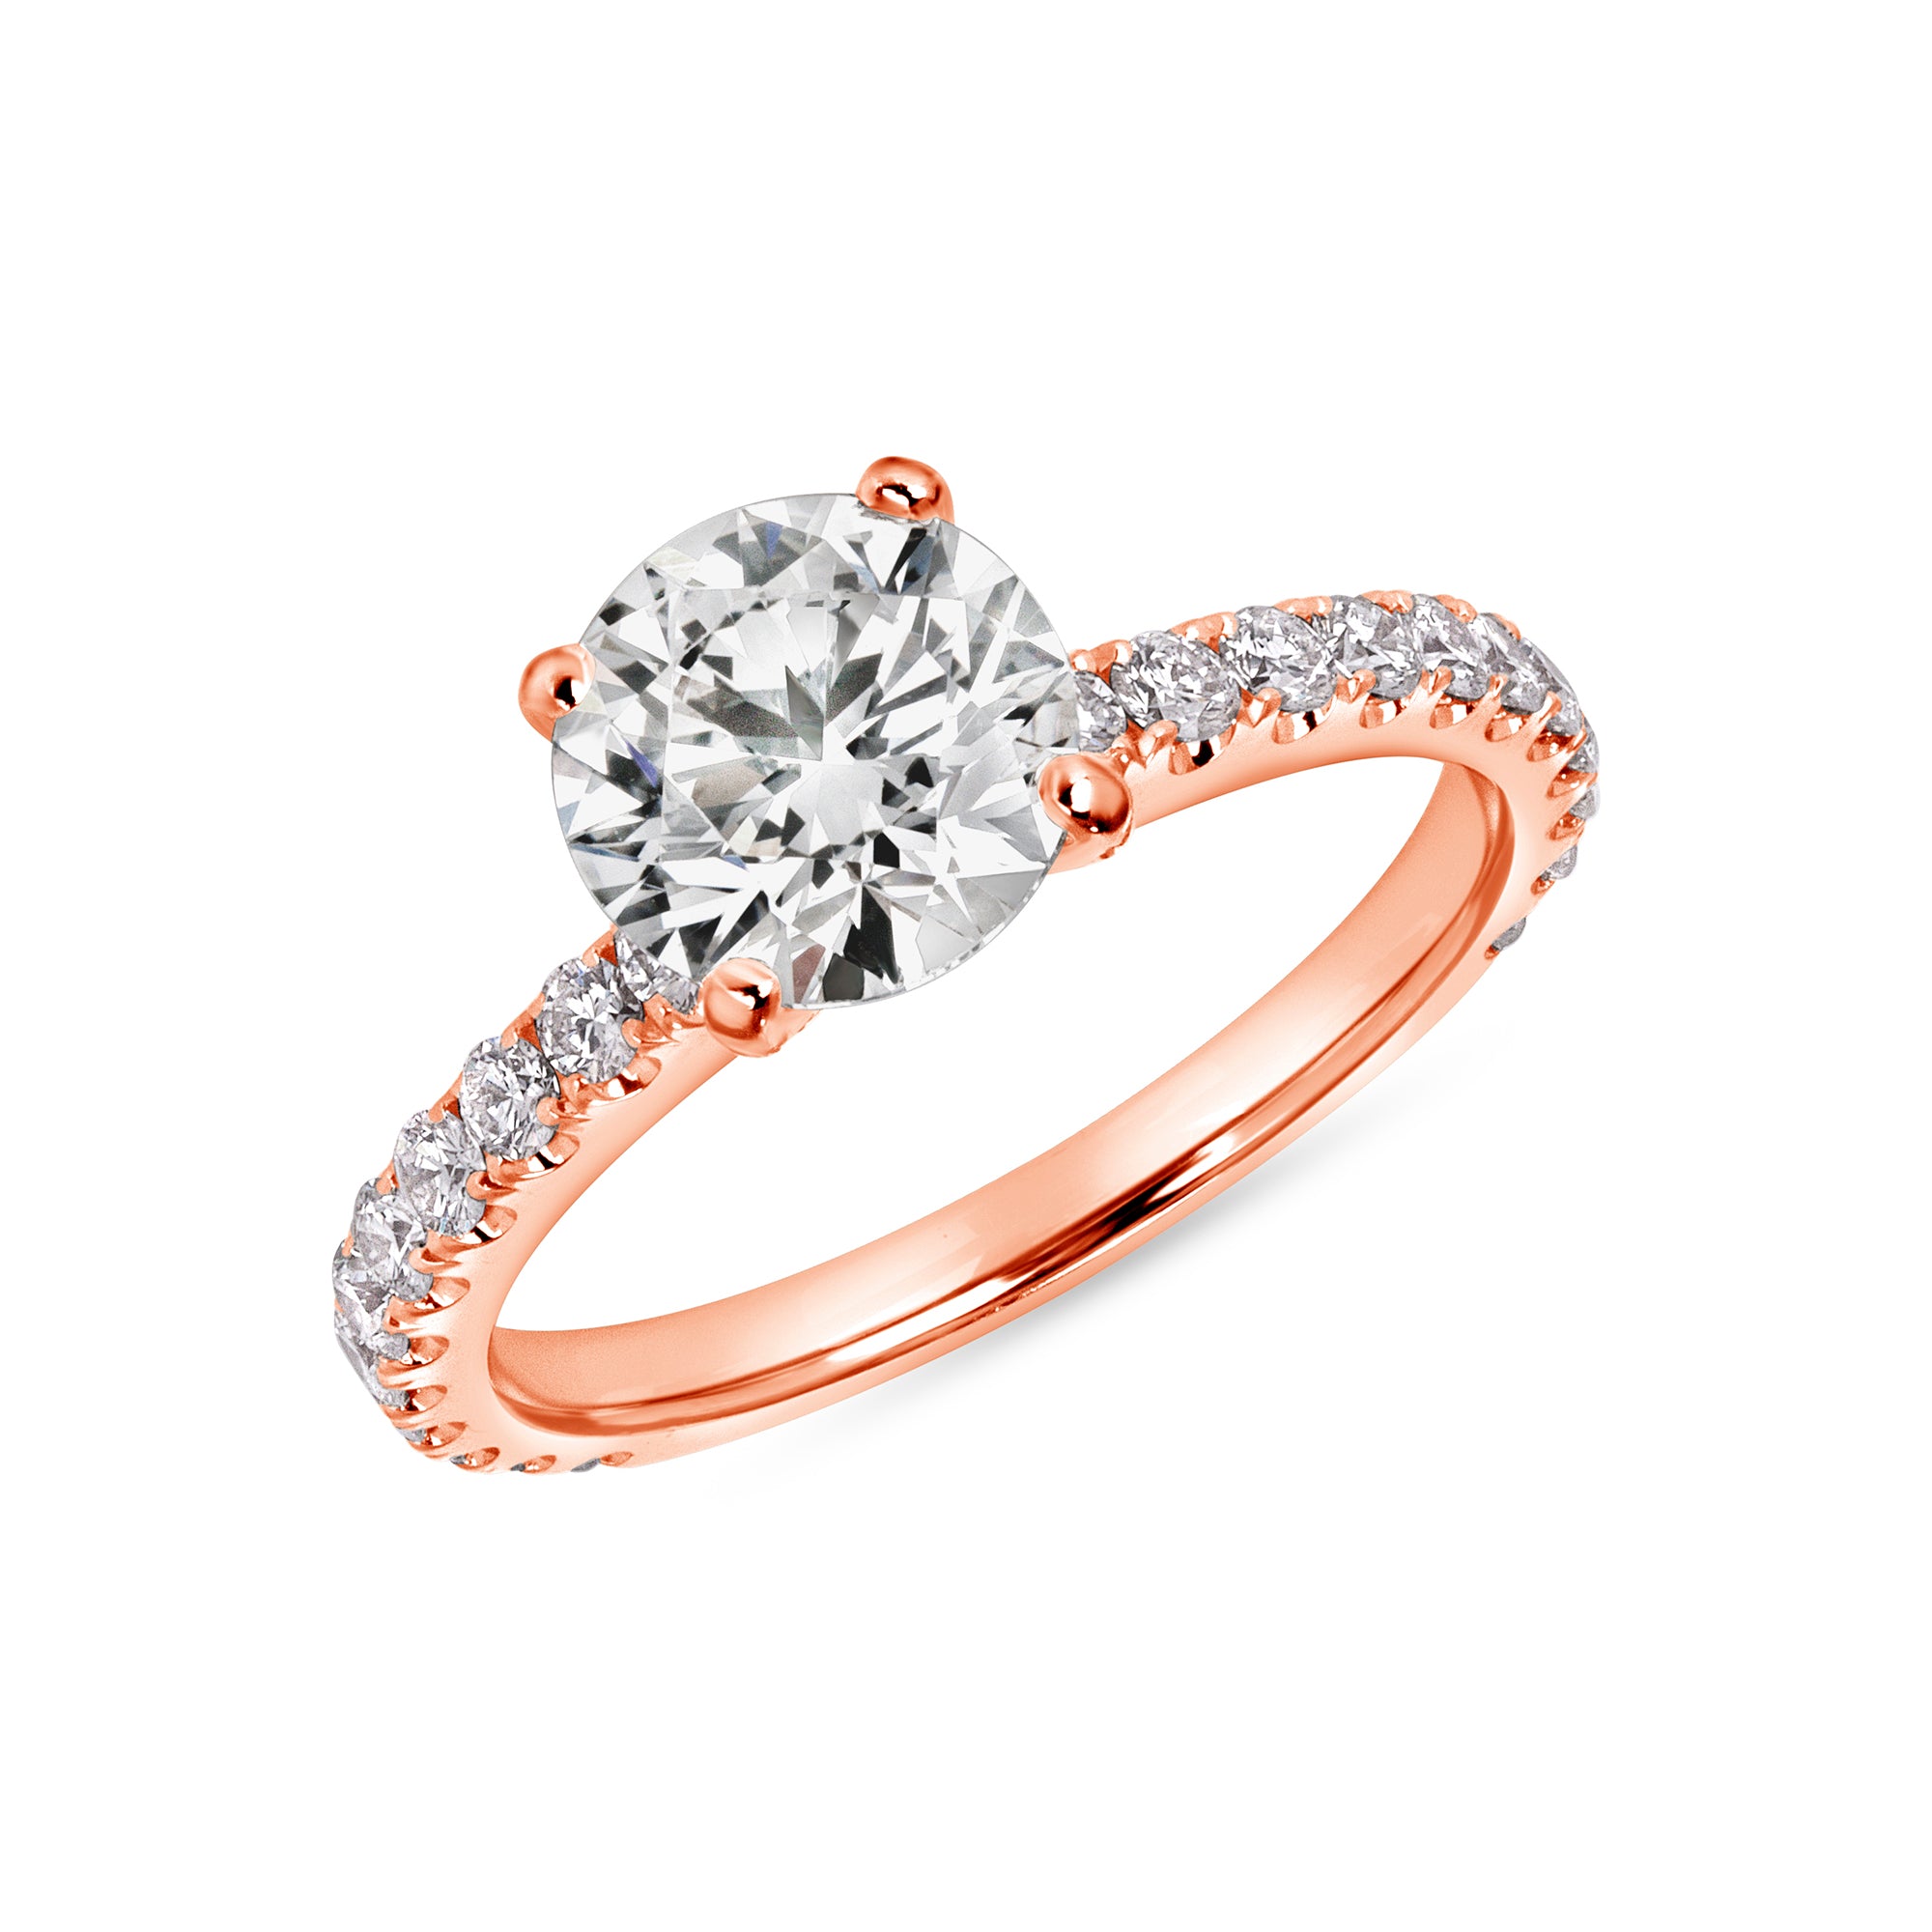 Round Cut Diamond Engagement Ring With U Prong Setting In 18 Karat Rose Gold